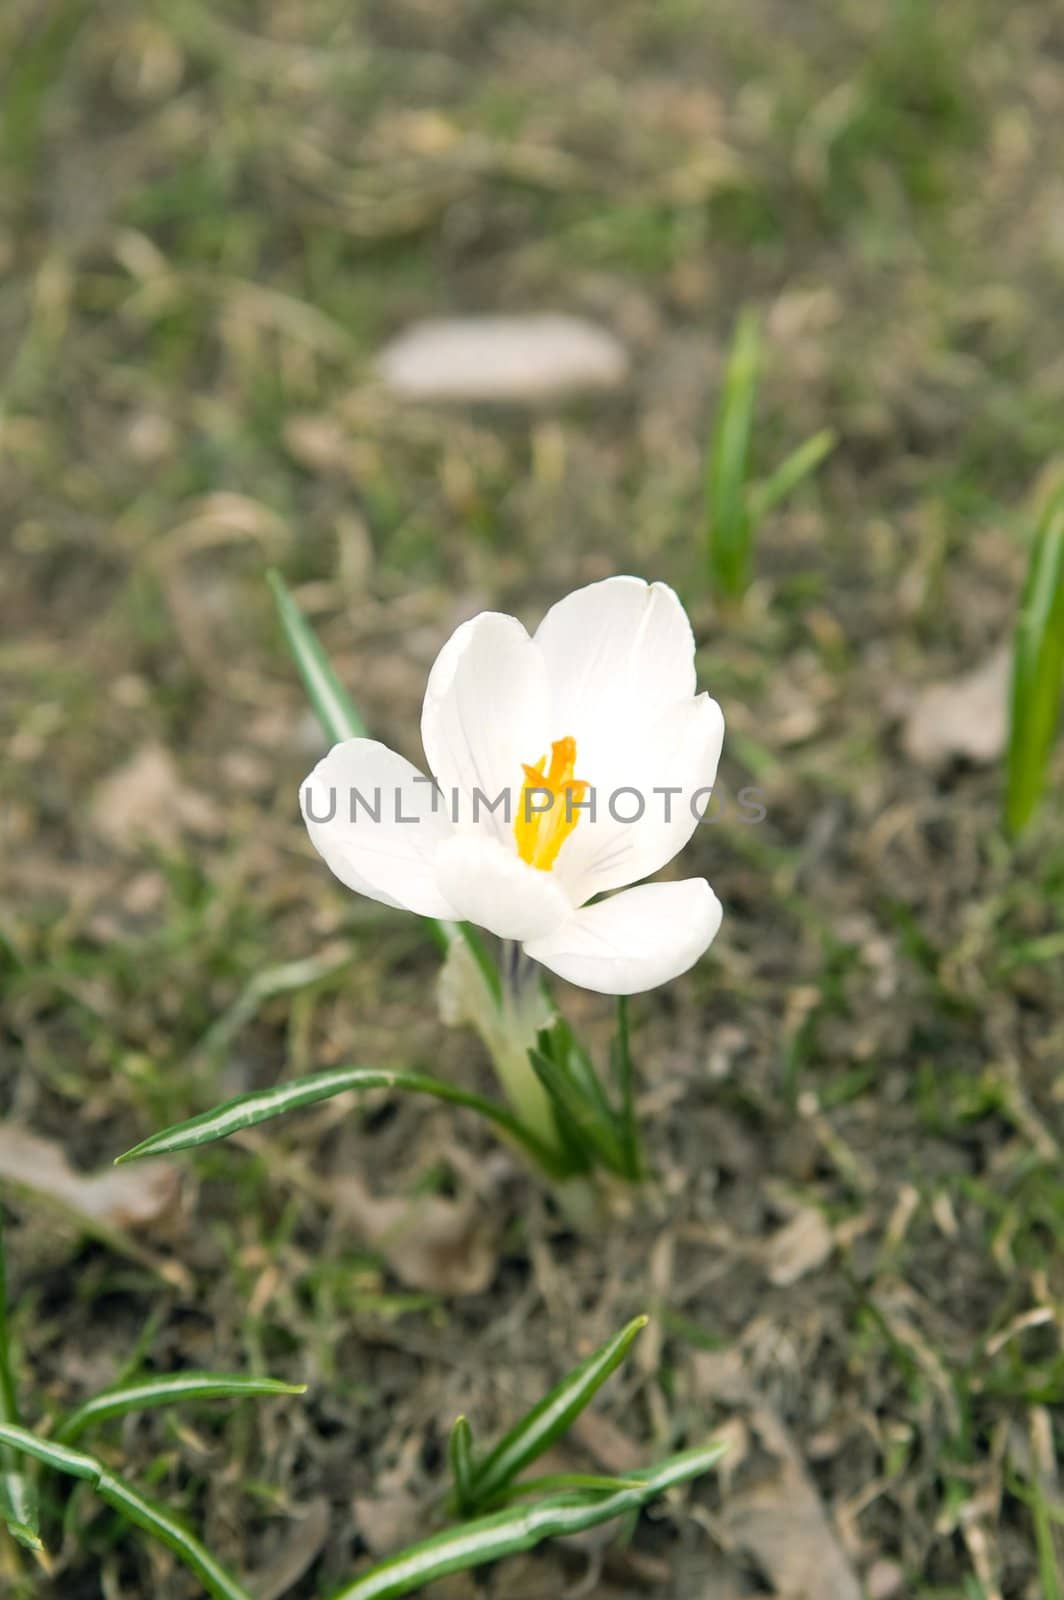 First spring flower (white crocus on green background)